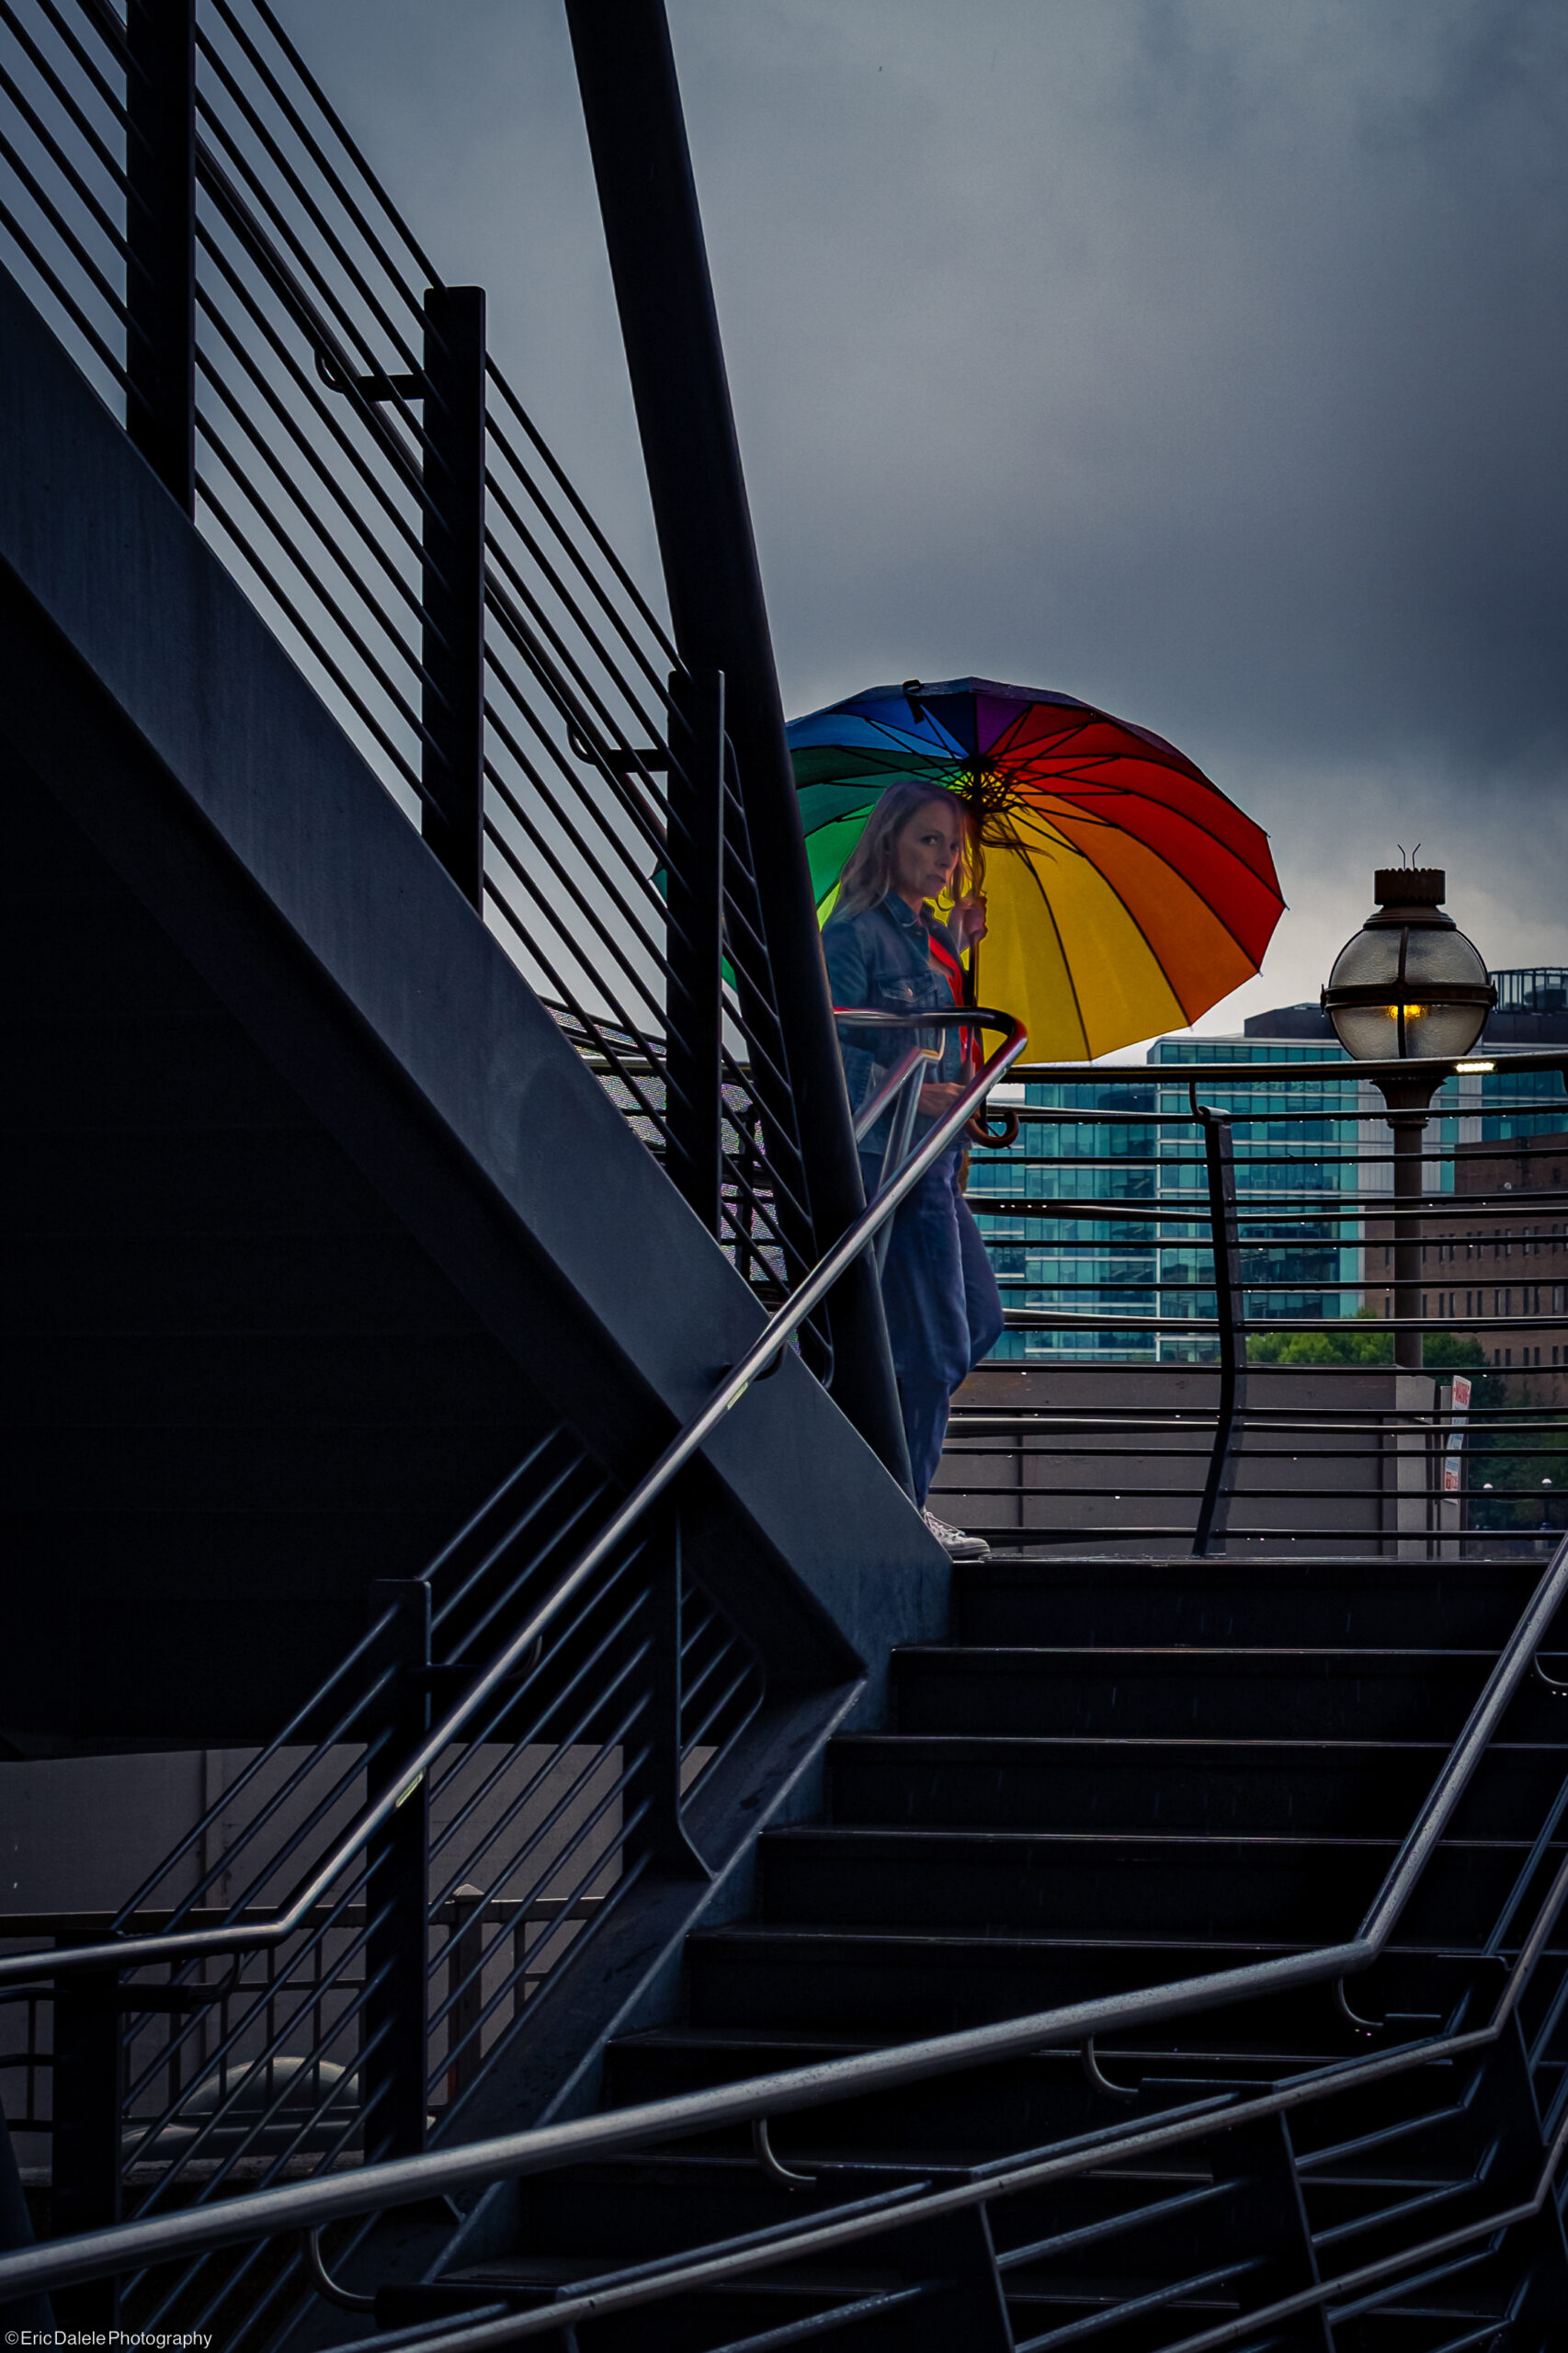 Fotografia de rua: a senhora com o seu guarda-chuva